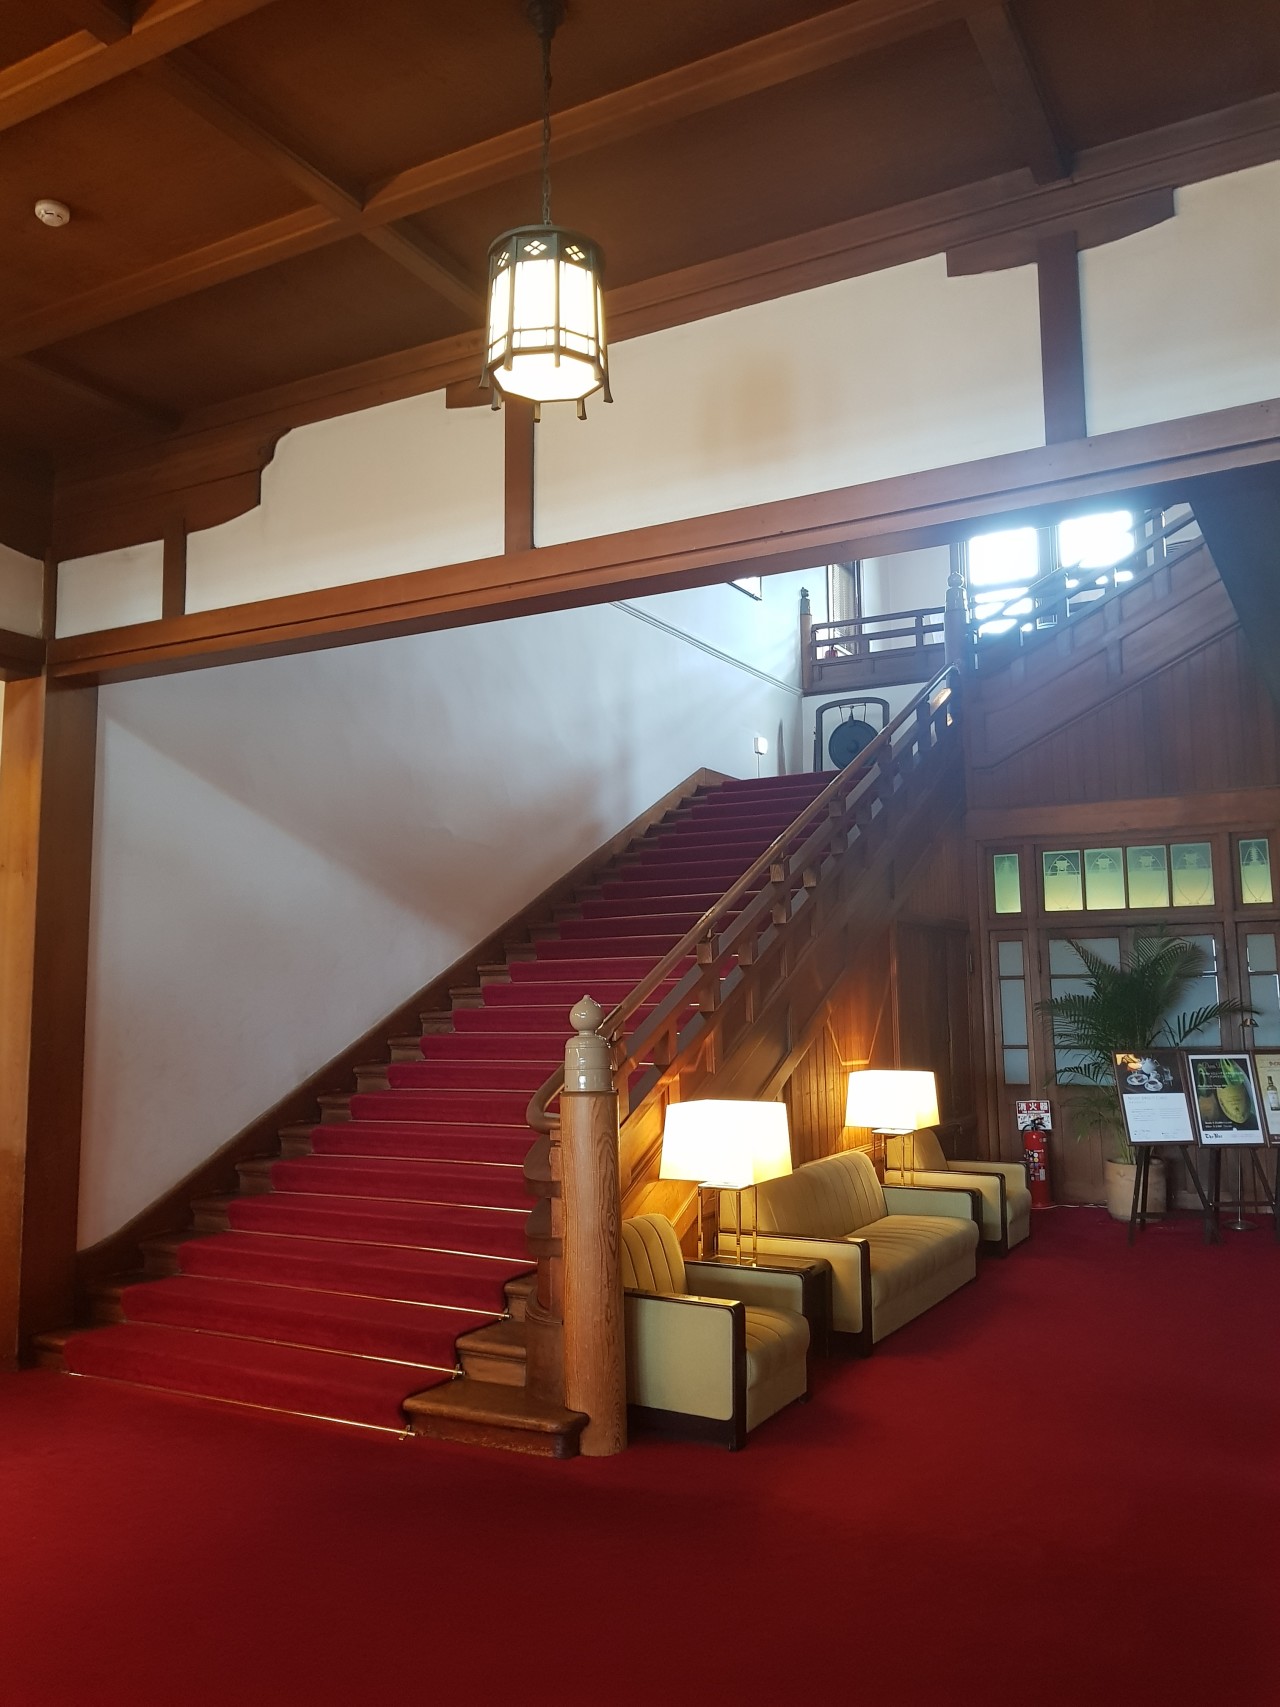 20171004_073752.jpg 일본 호텔,료칸 후기 - 2편 ( 나라 / 오사카 / 교토 / 고베 / 미에 / 와카야마 )